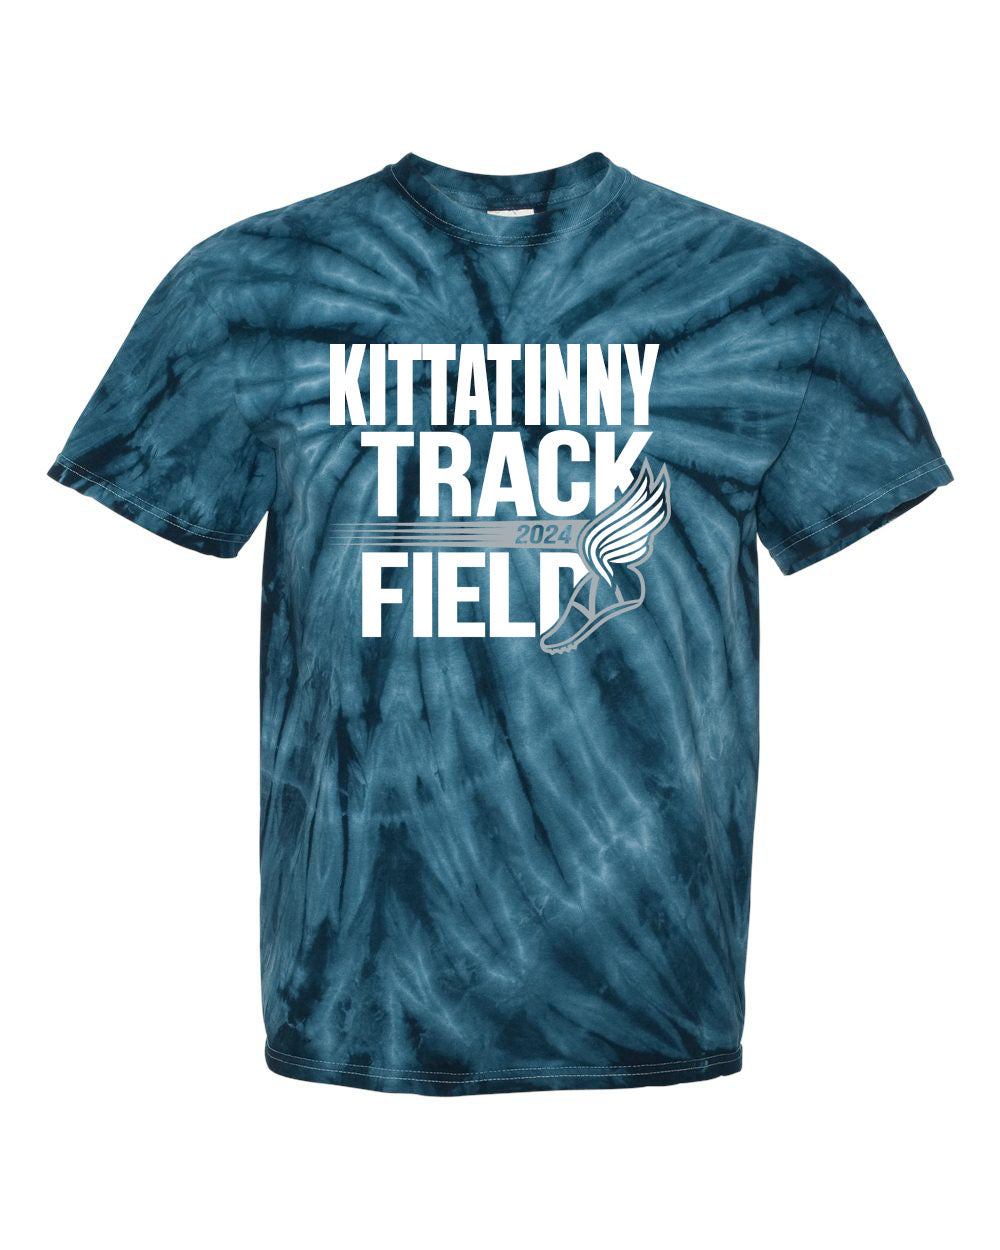 Kittatinny Track Tie Dye t-shirt Design 6